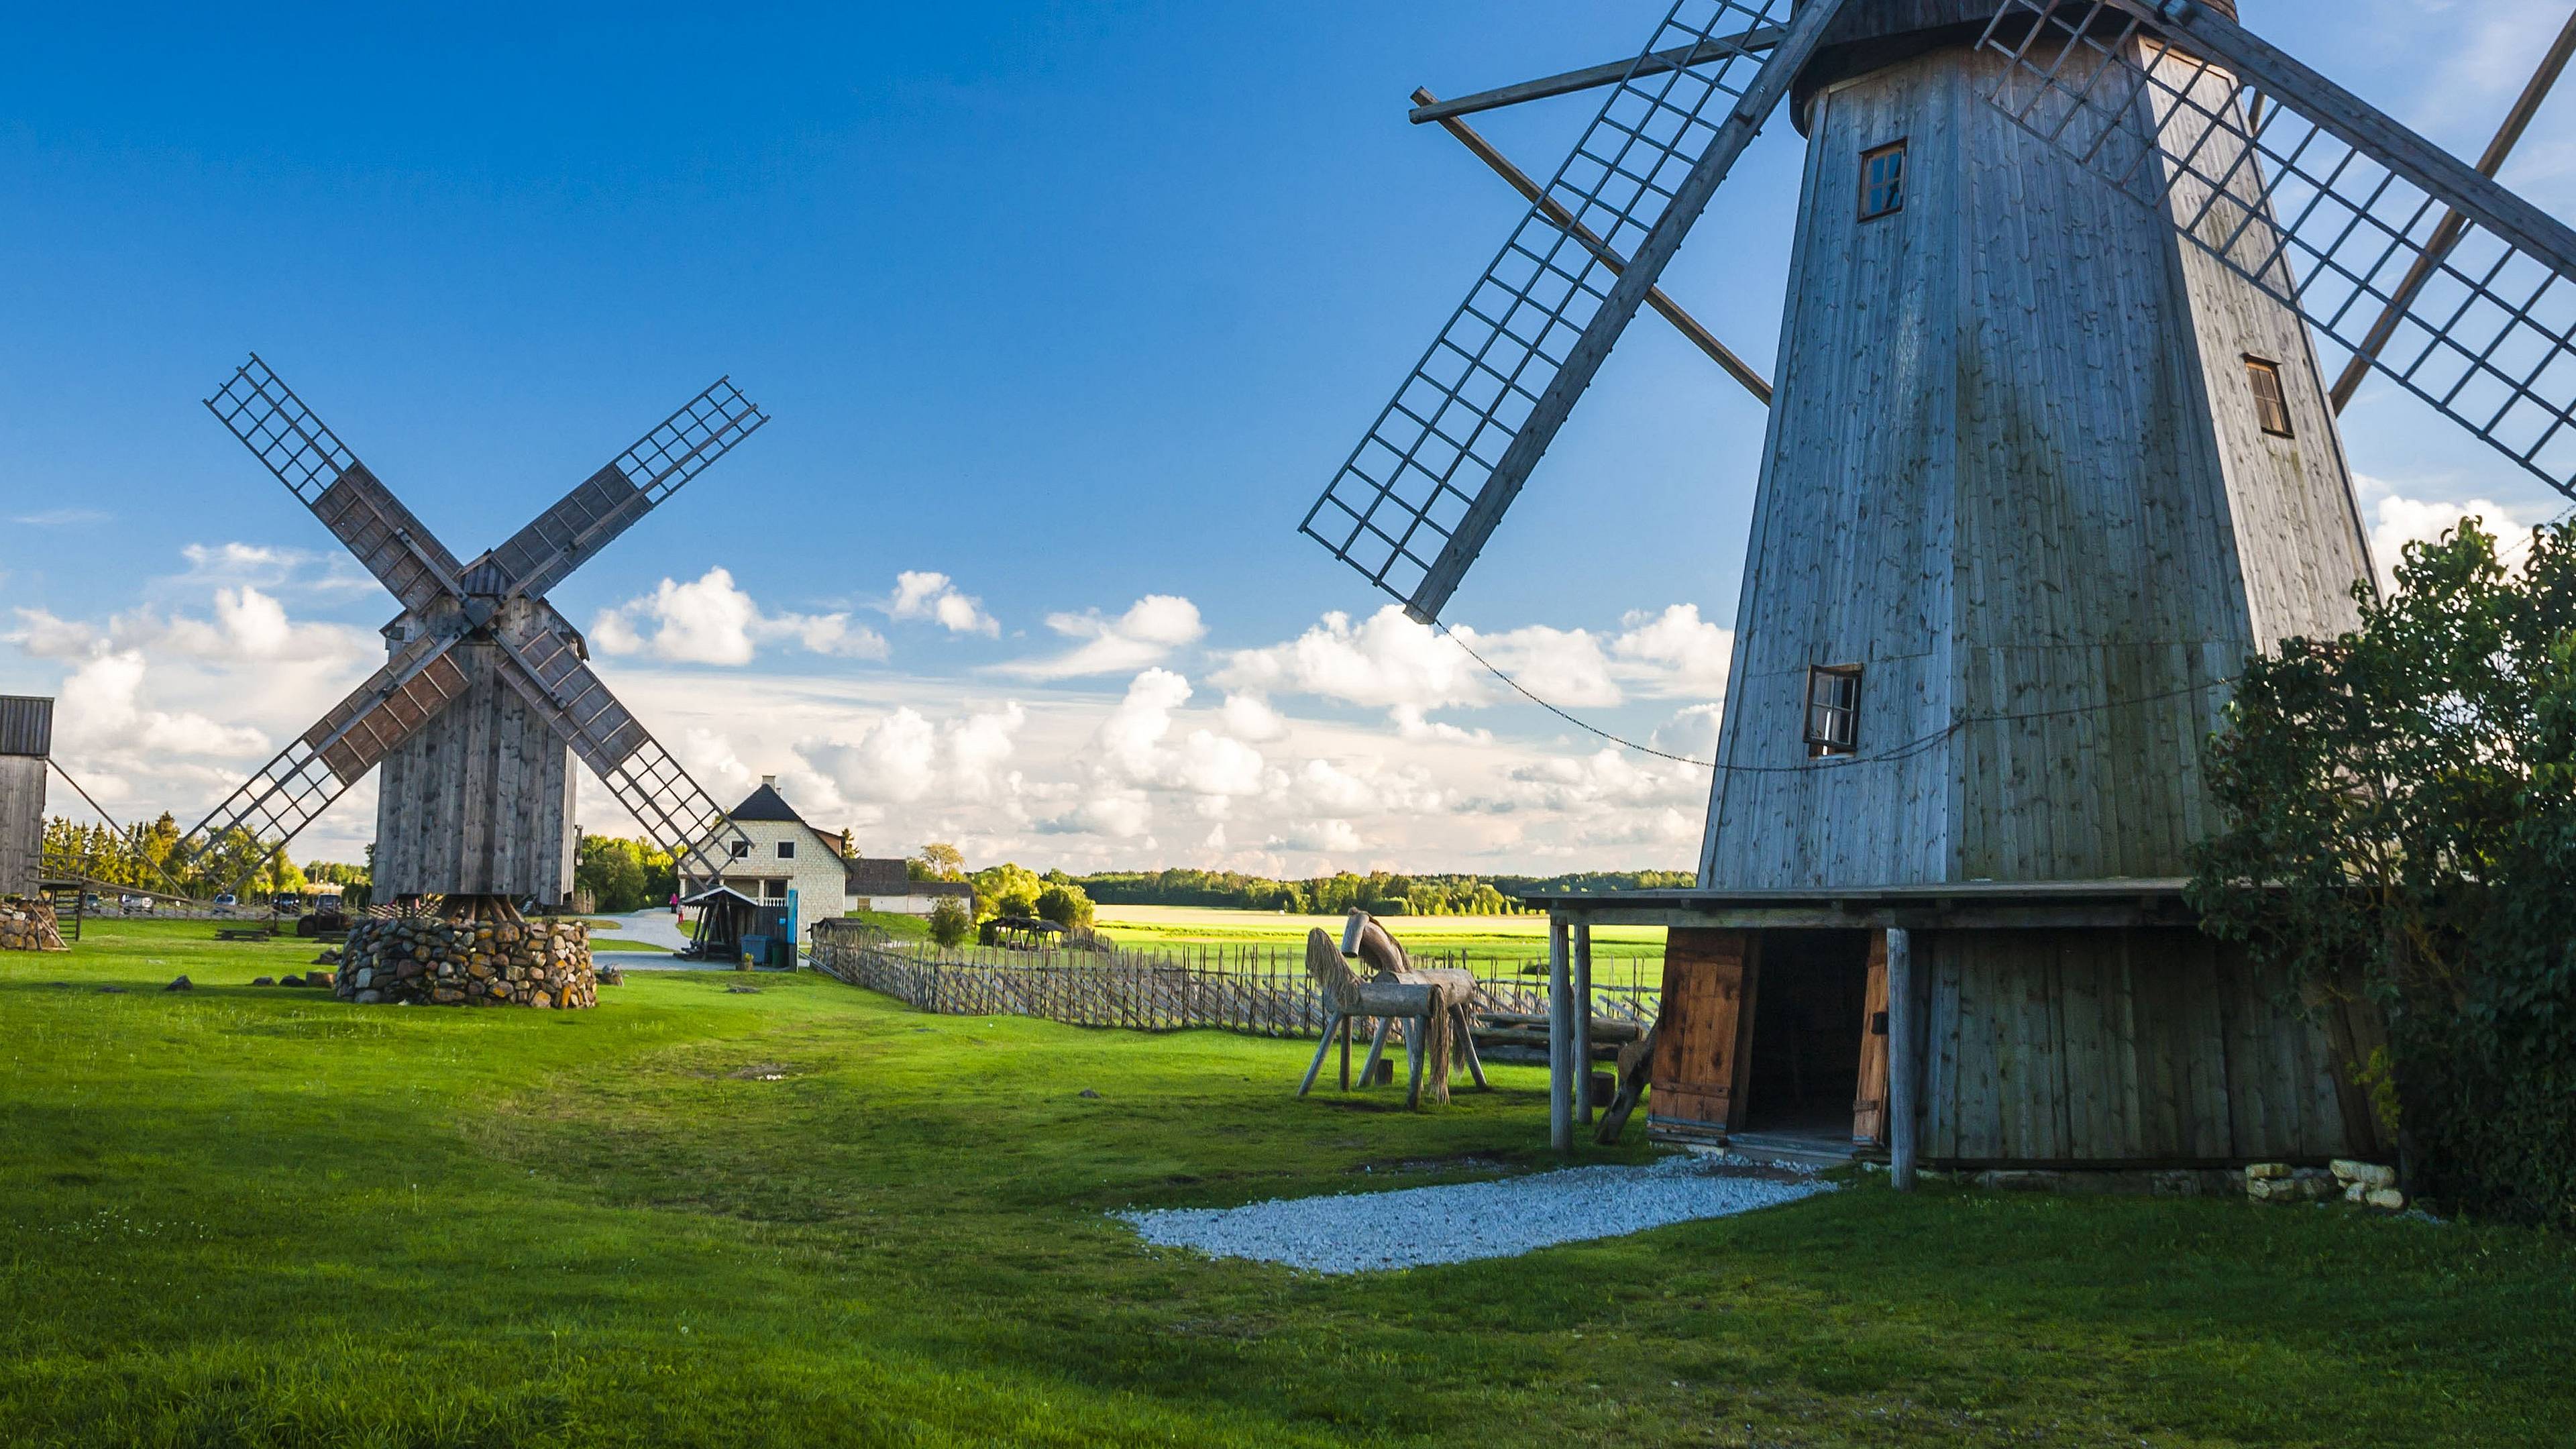 The mills of Angla, Estonia